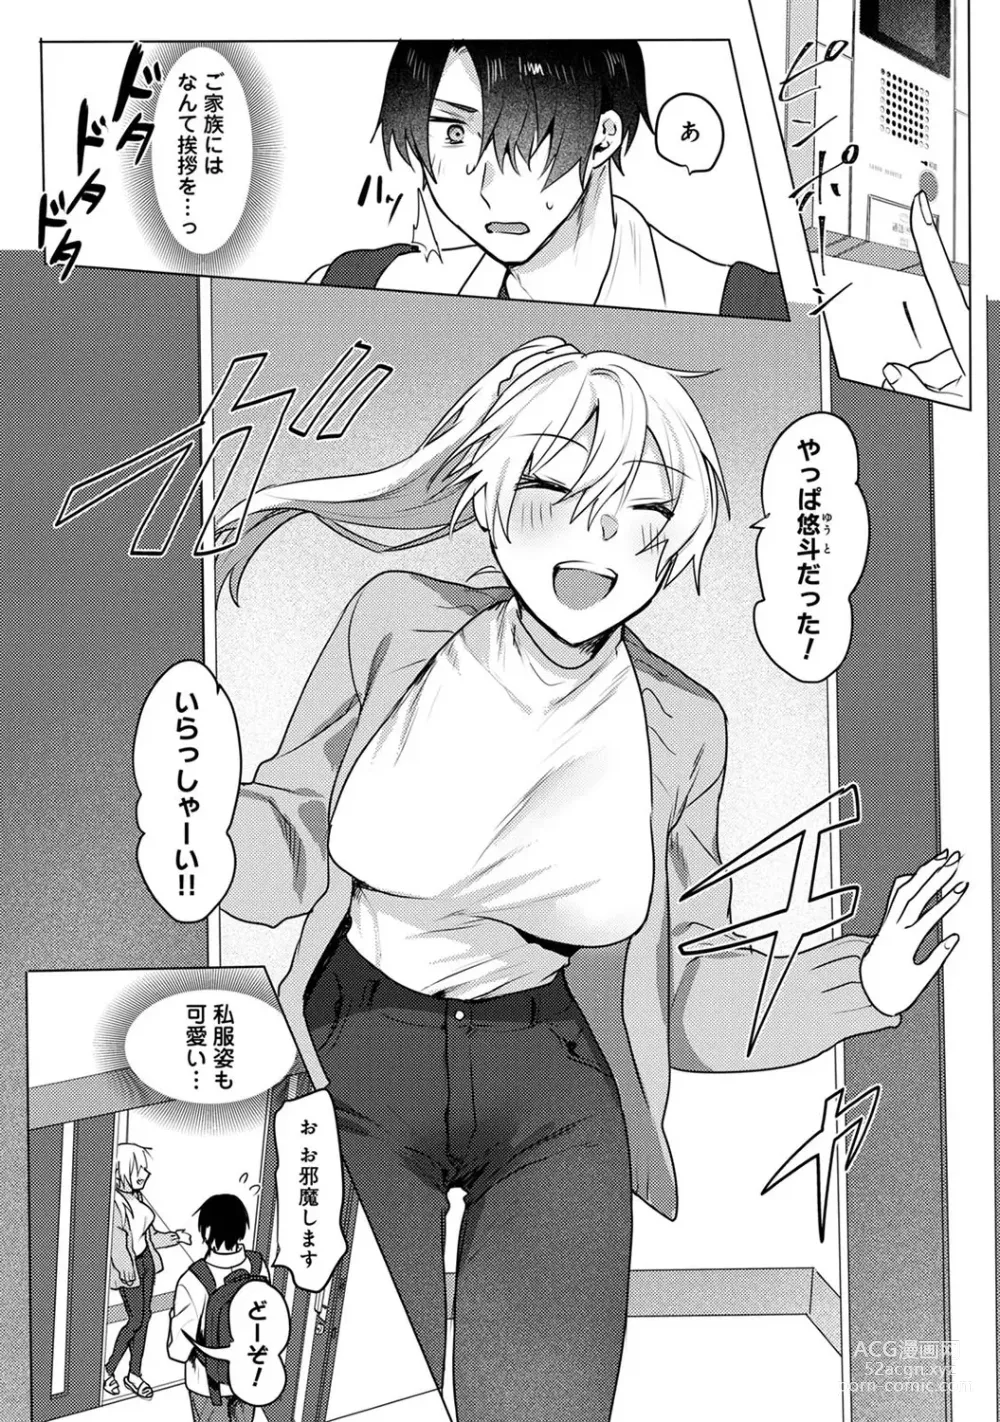 Page 3 of manga Otaku-kun, doujinshi sokubaikai detekunne!? Ch. 4